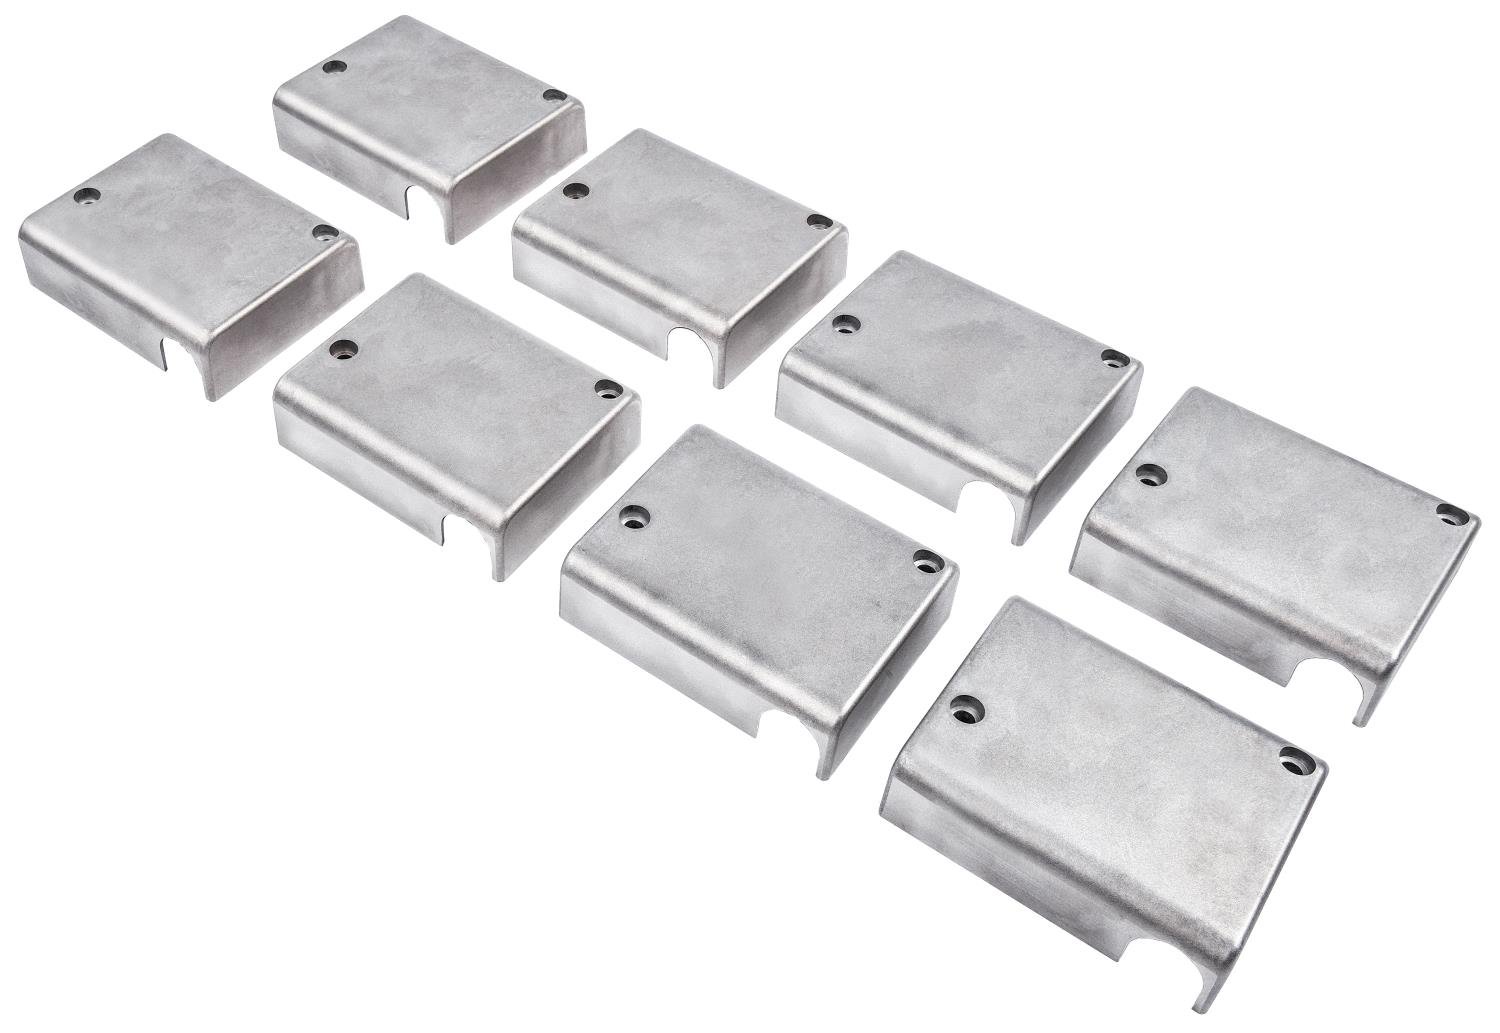 Aluminum Ignition Coil Cover Set for 5.7L, 6.1L, 6.4L Gen III Hemi Engines [Natural Finish]